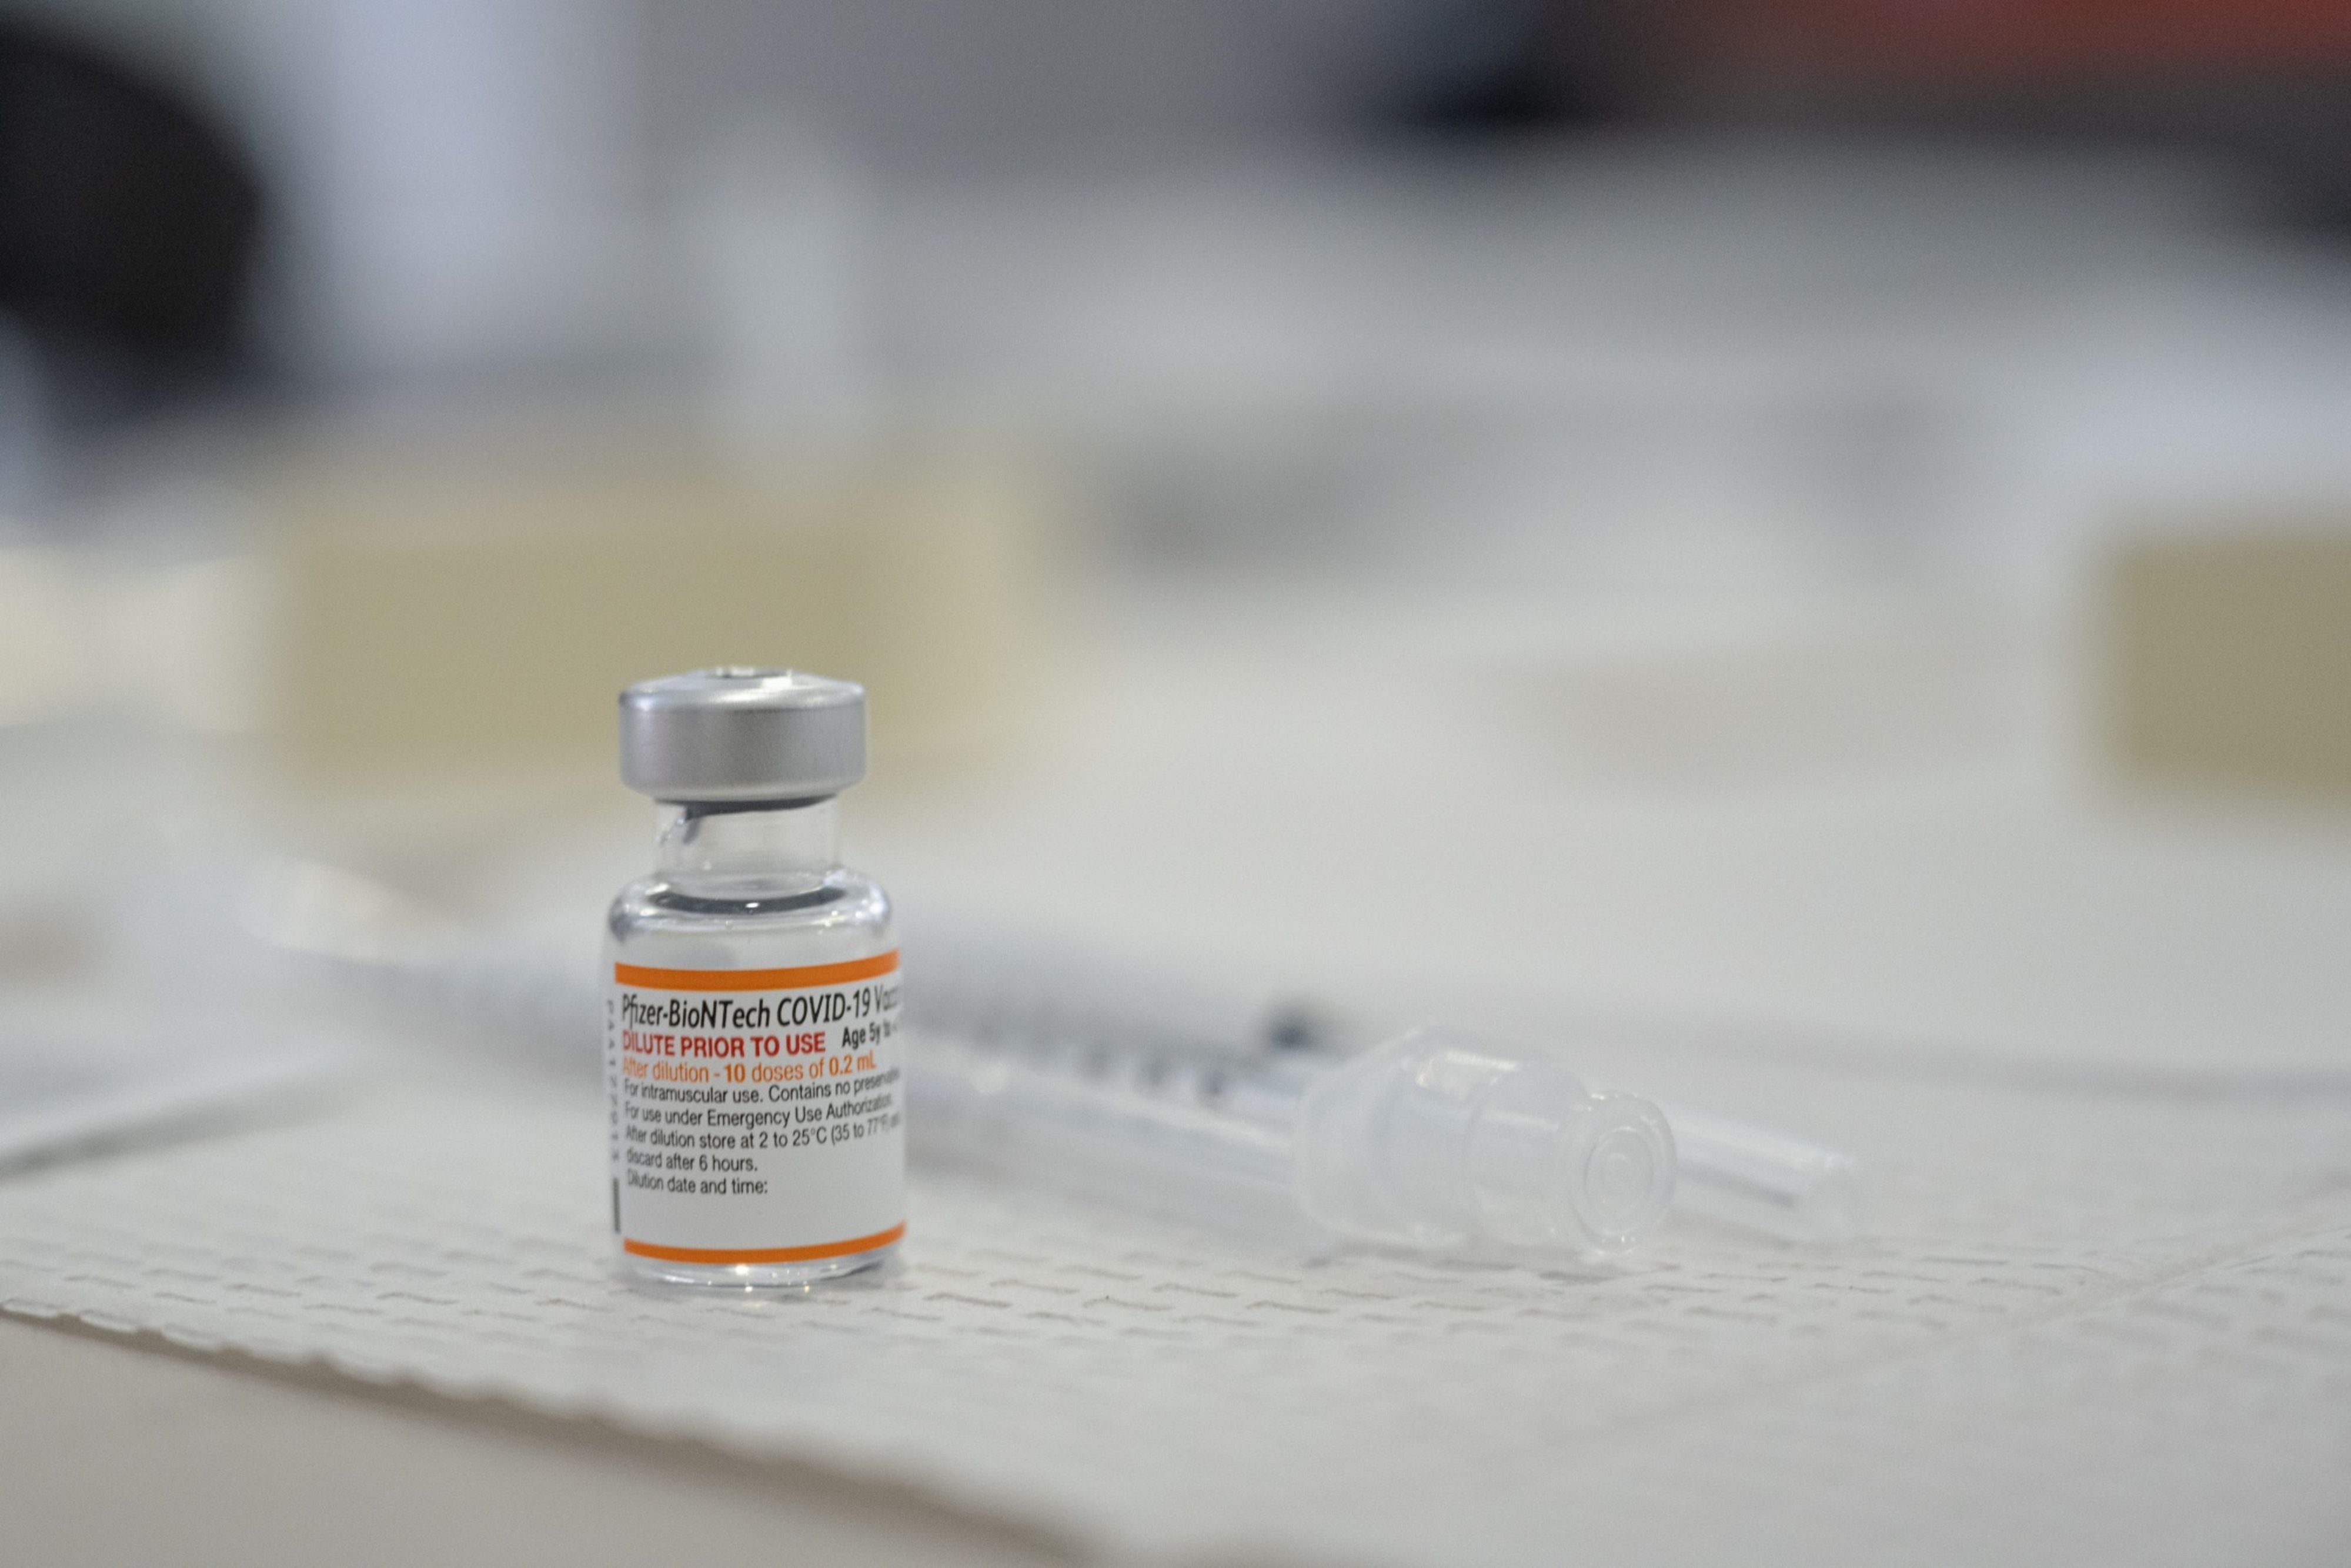 Vacuna COVID contra ómicron estará lista en marzo, asegura Pfizer